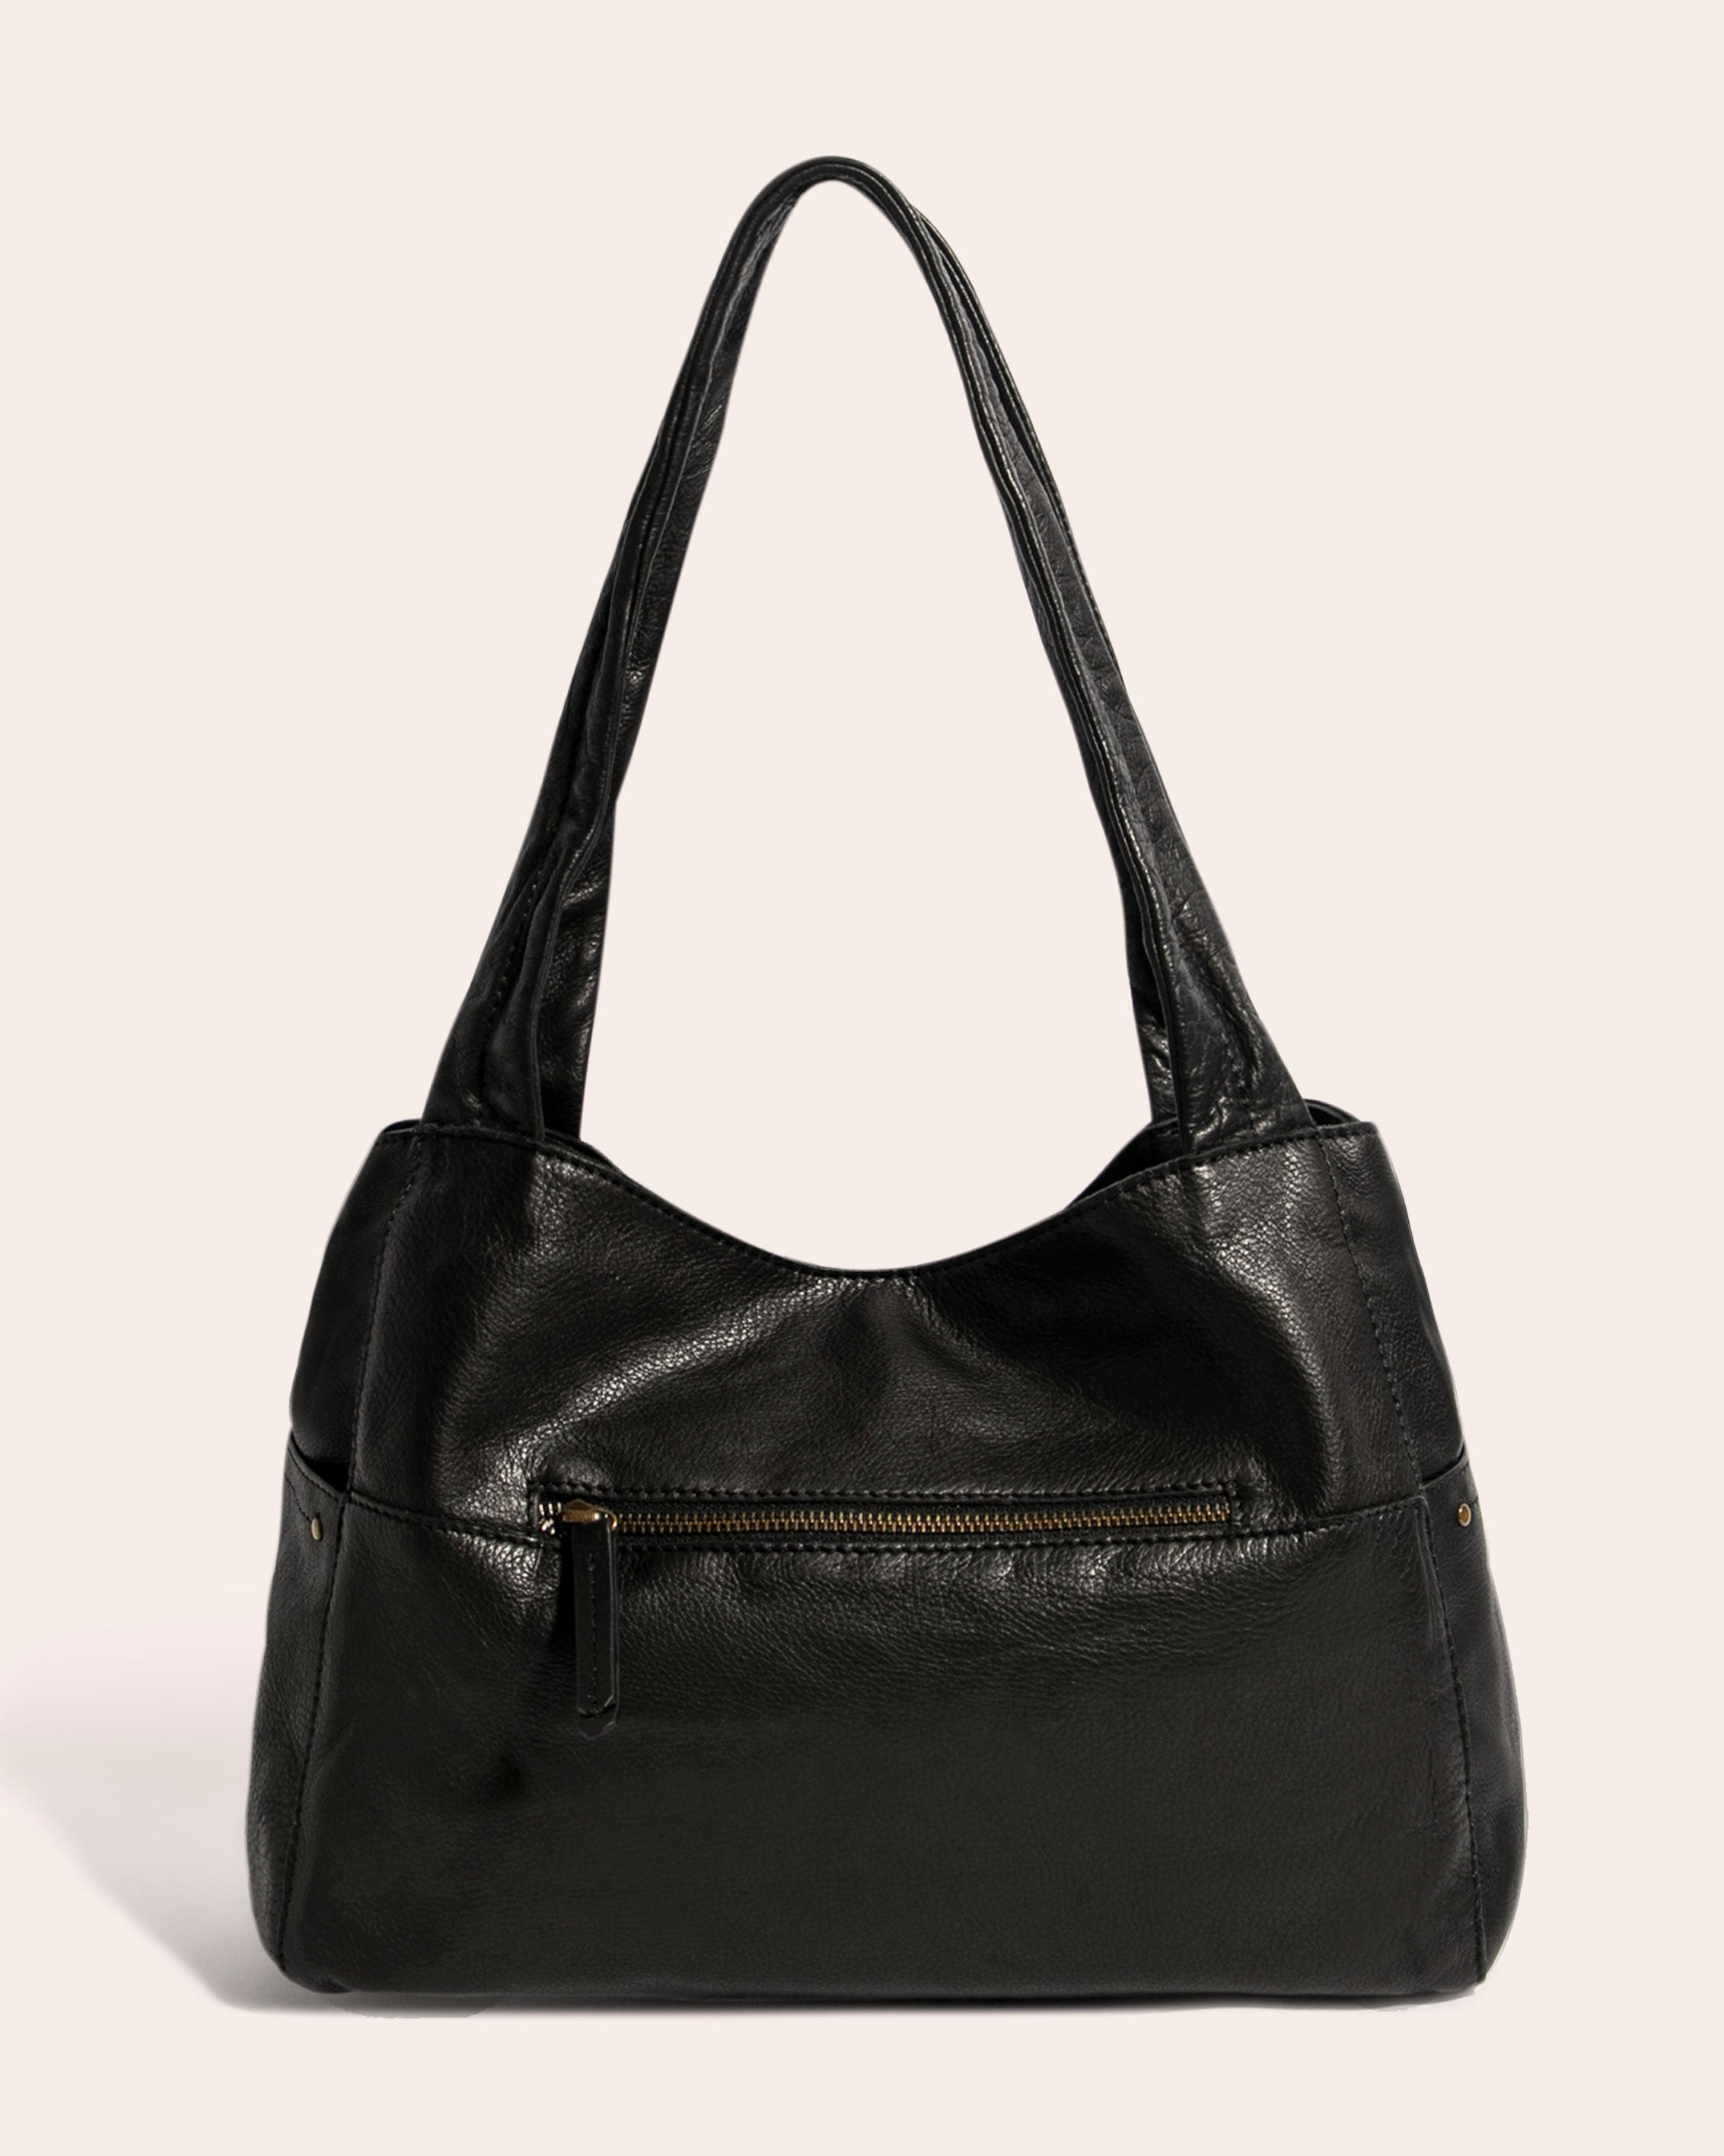 American Leather Co. Virginia Hobo ,Black